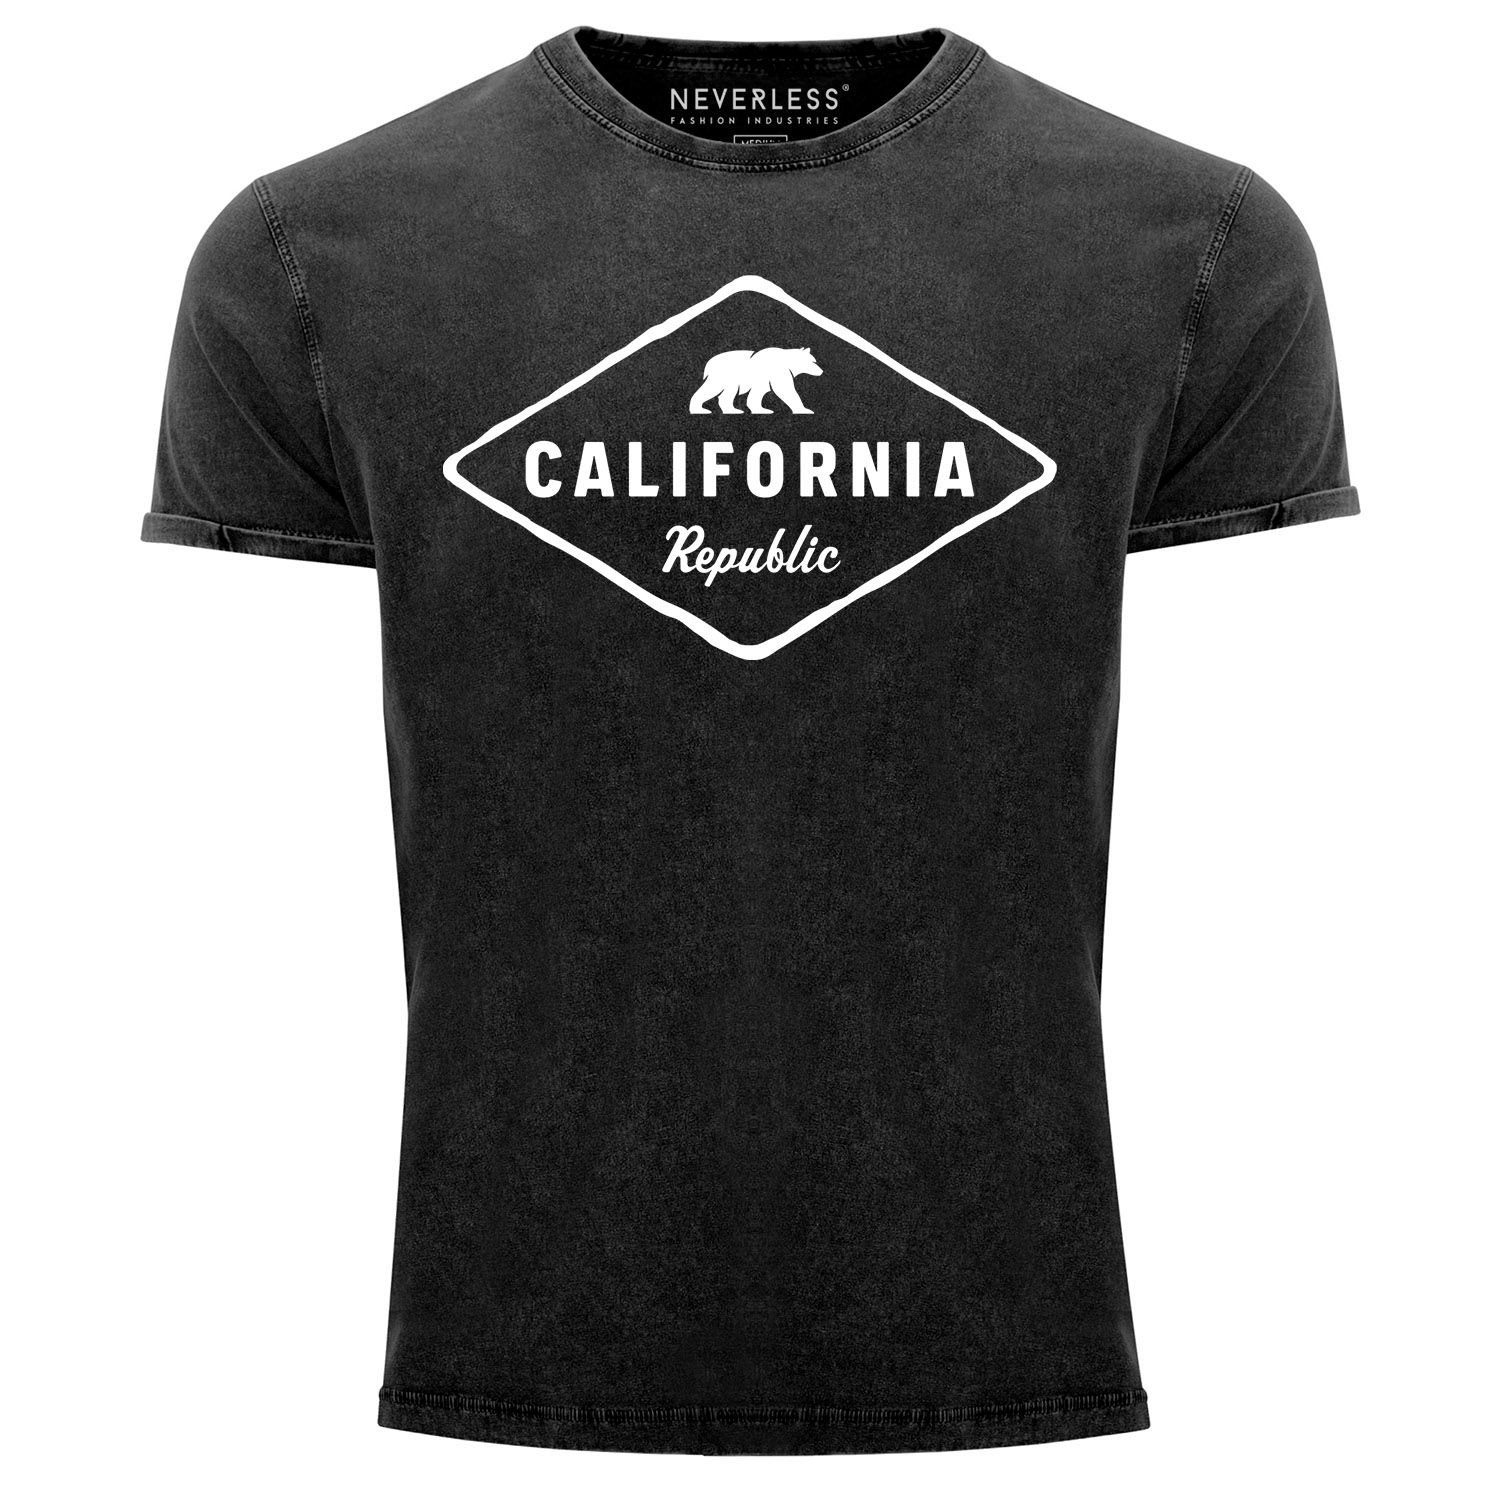 Neverless Print-Shirt Herren Vintage Shirt California Republic Bear Badge Bär Sunshine State USA Printshirt T-Shirt Aufdruck Neverless® mit Print schwarz